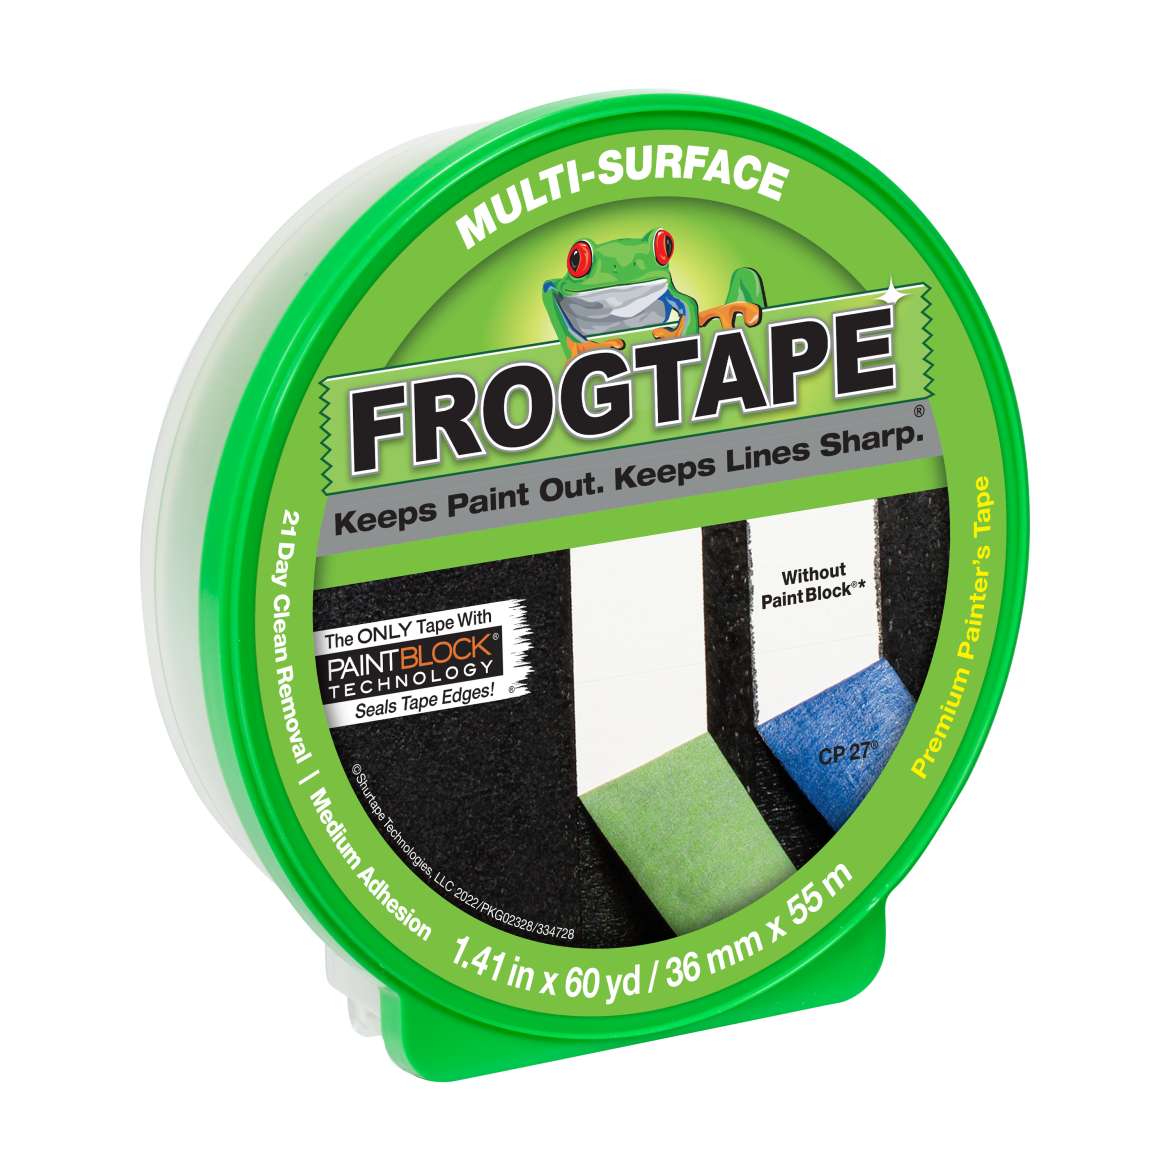  FrogTape® brand Painter's Tape - Multi-Surface - Frog Tape